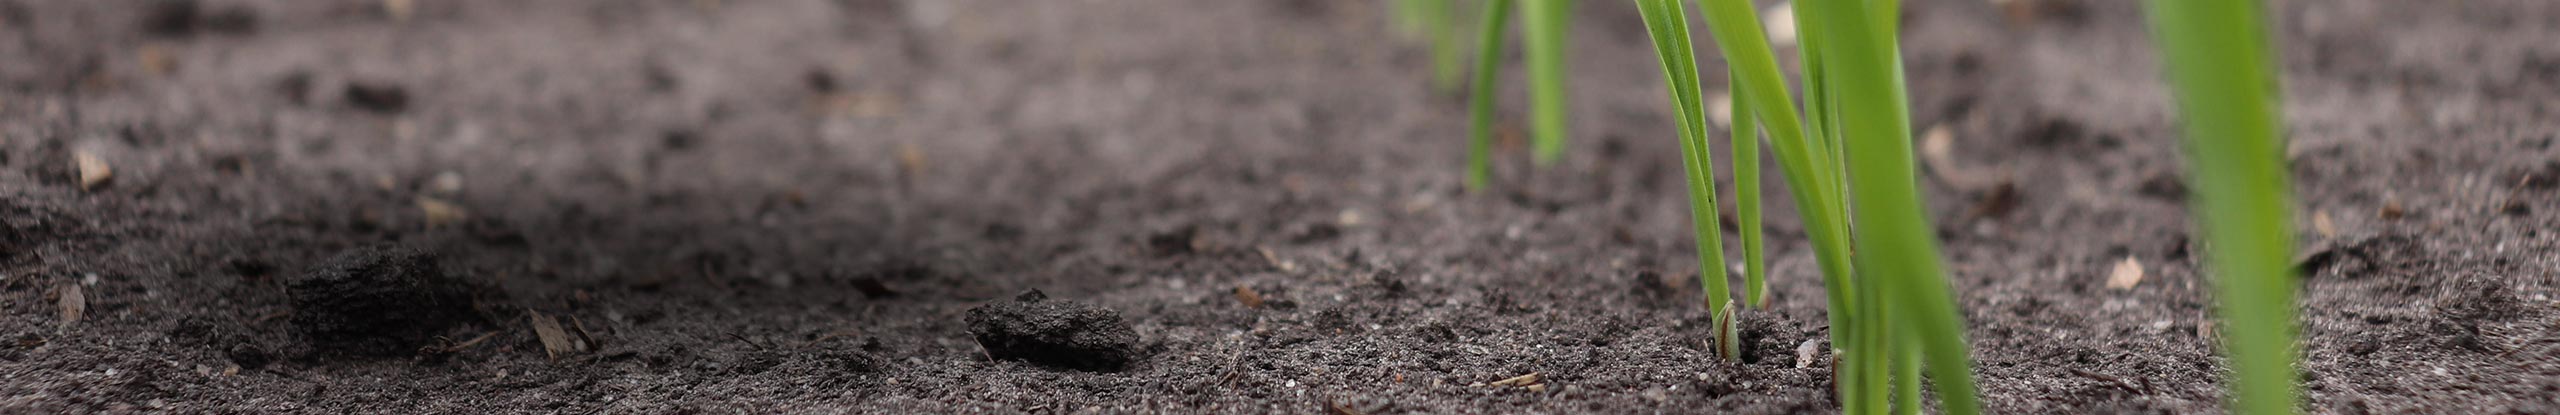 Dry Soils Impacting Winter Wheat Emergence?